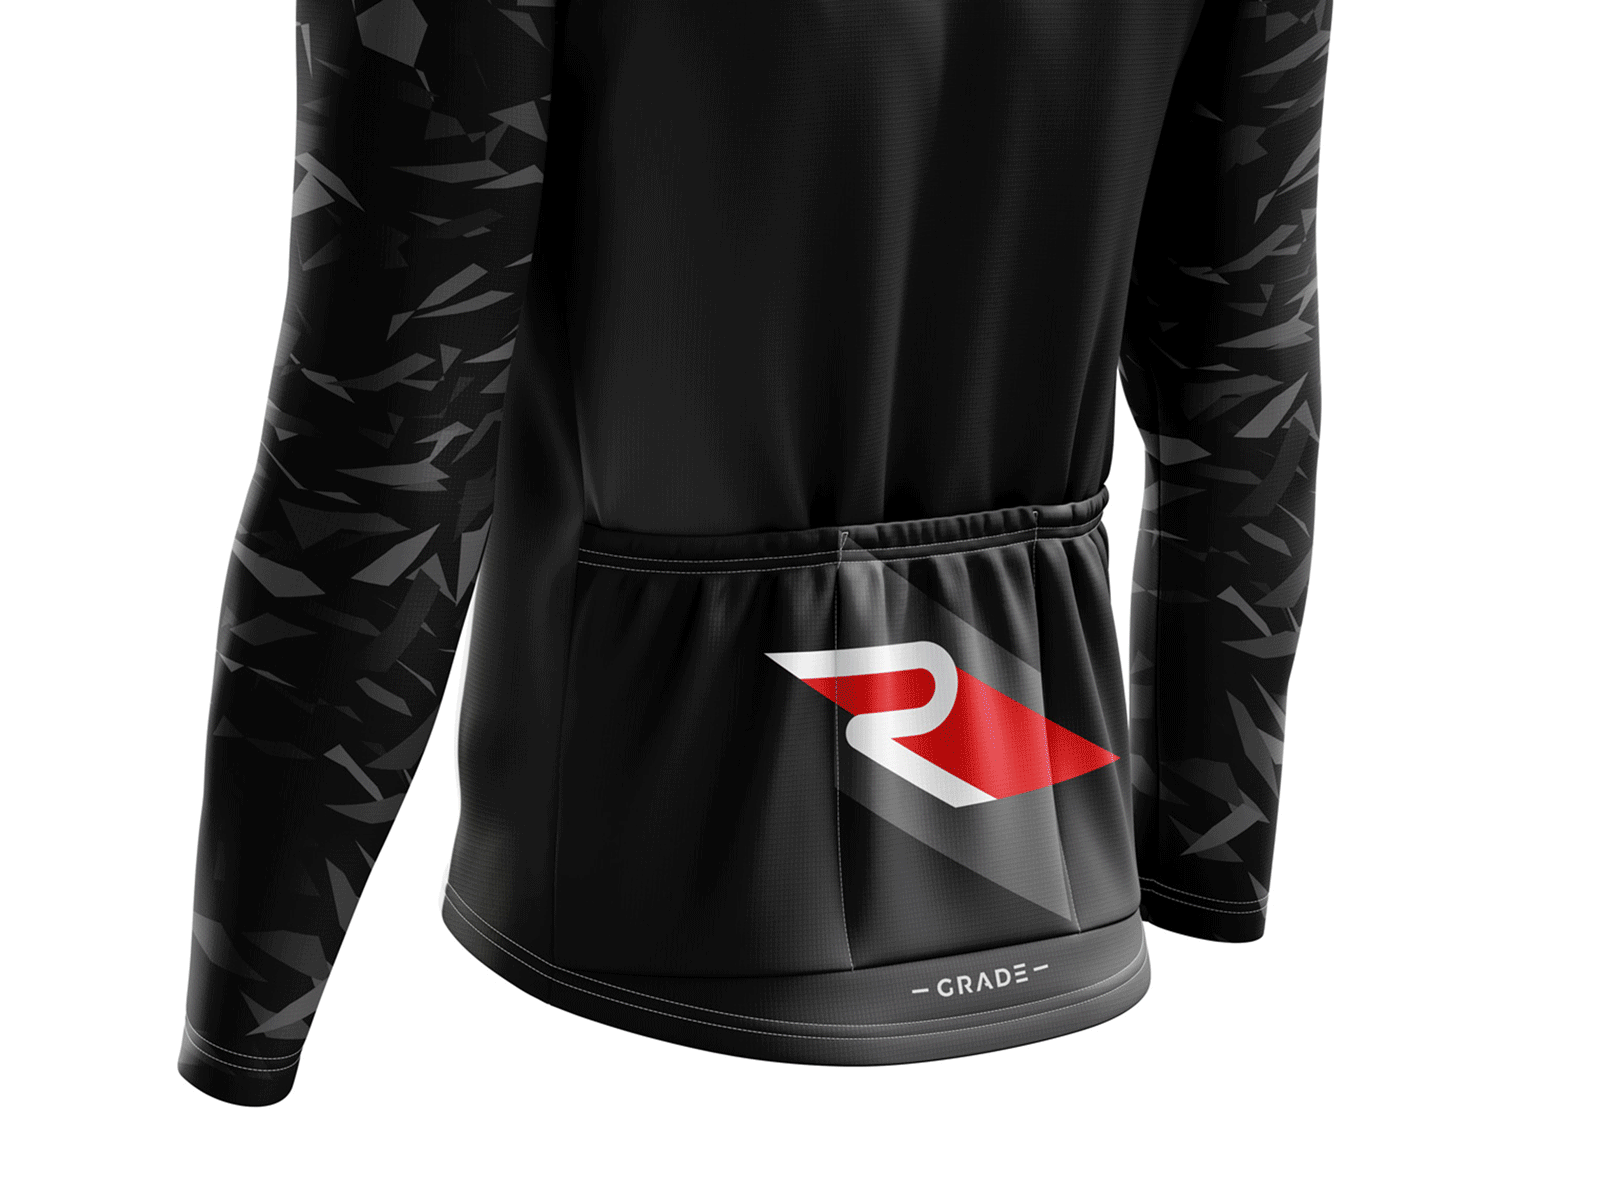 GRADE Back ciclismo cycling cyclist diagonal diagonals jacket jersey pattern rogersport simple